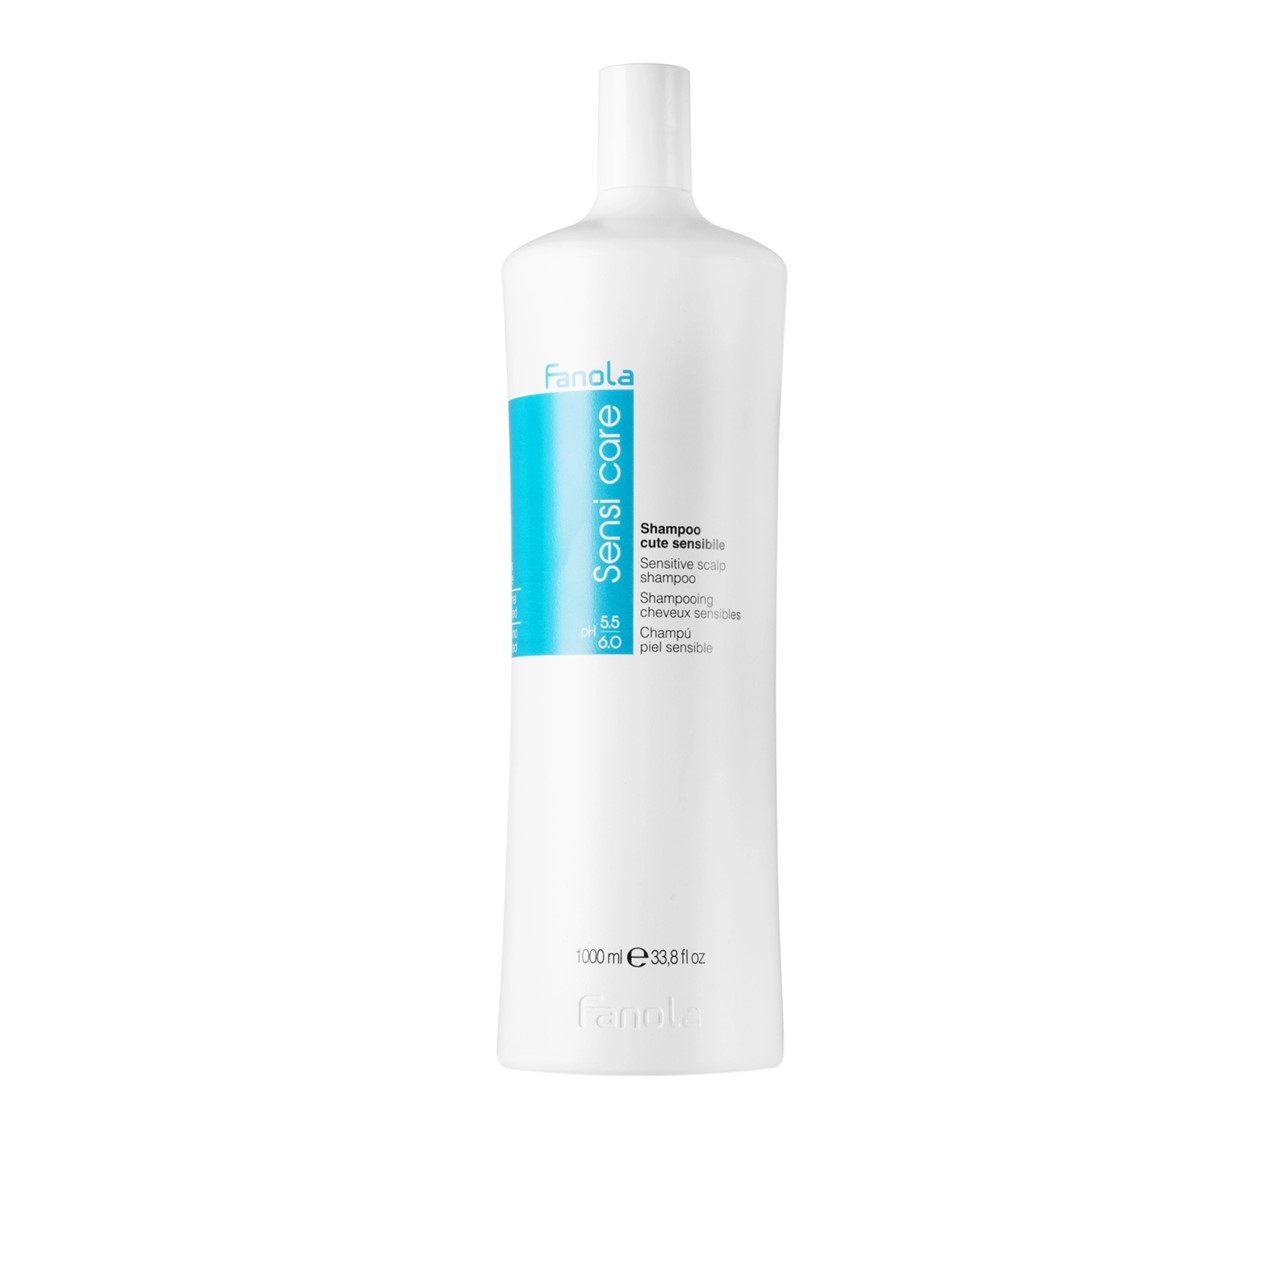 Fanola Sensi Care Sensitive Scalp Shampoo 1L (33.8 fl oz)